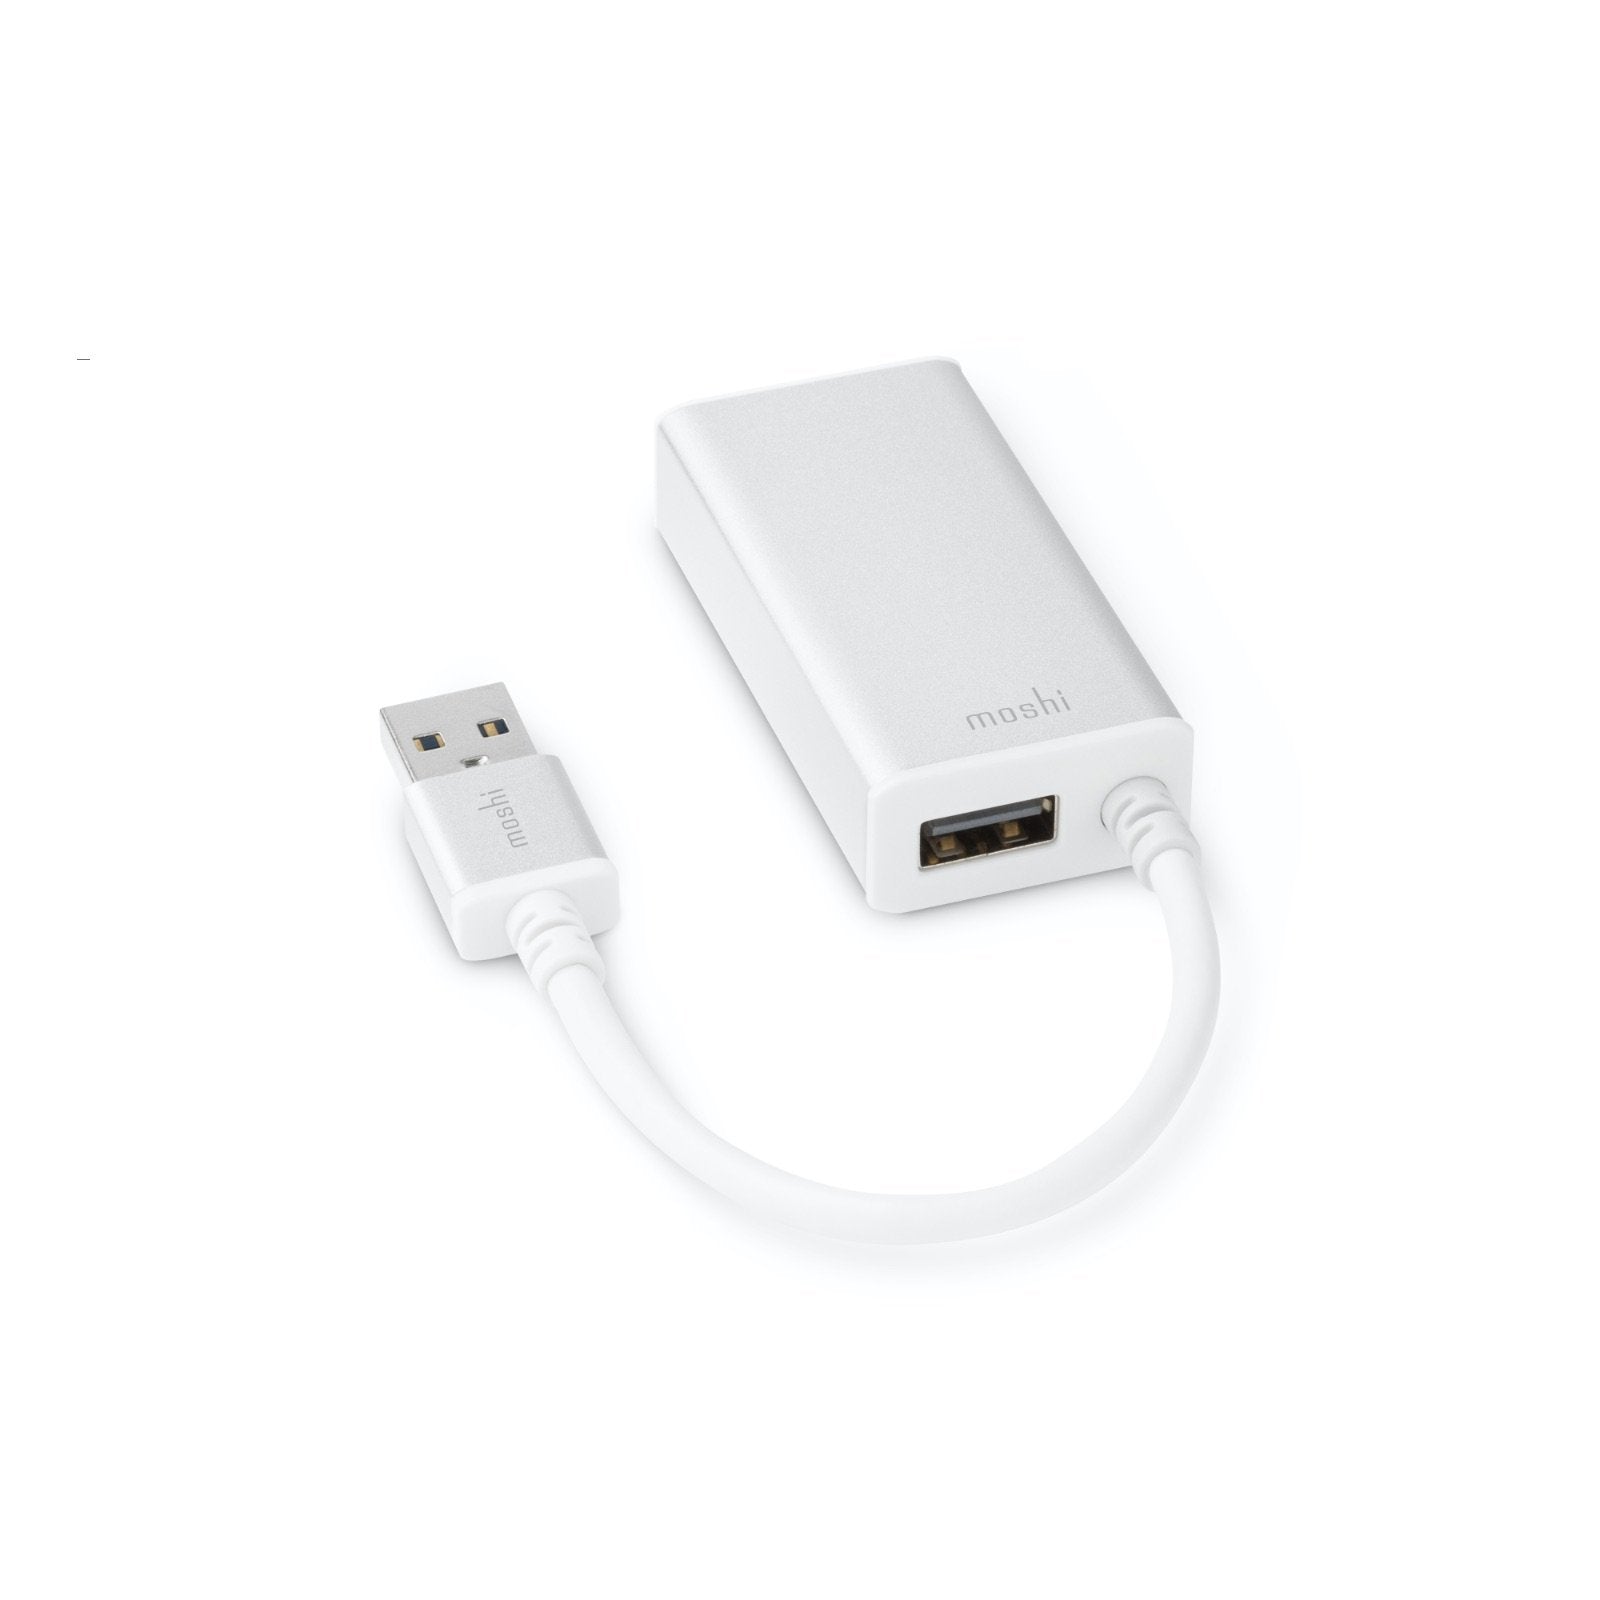 Moshi USB 3.0 to Gigabit Ethernet Adapter